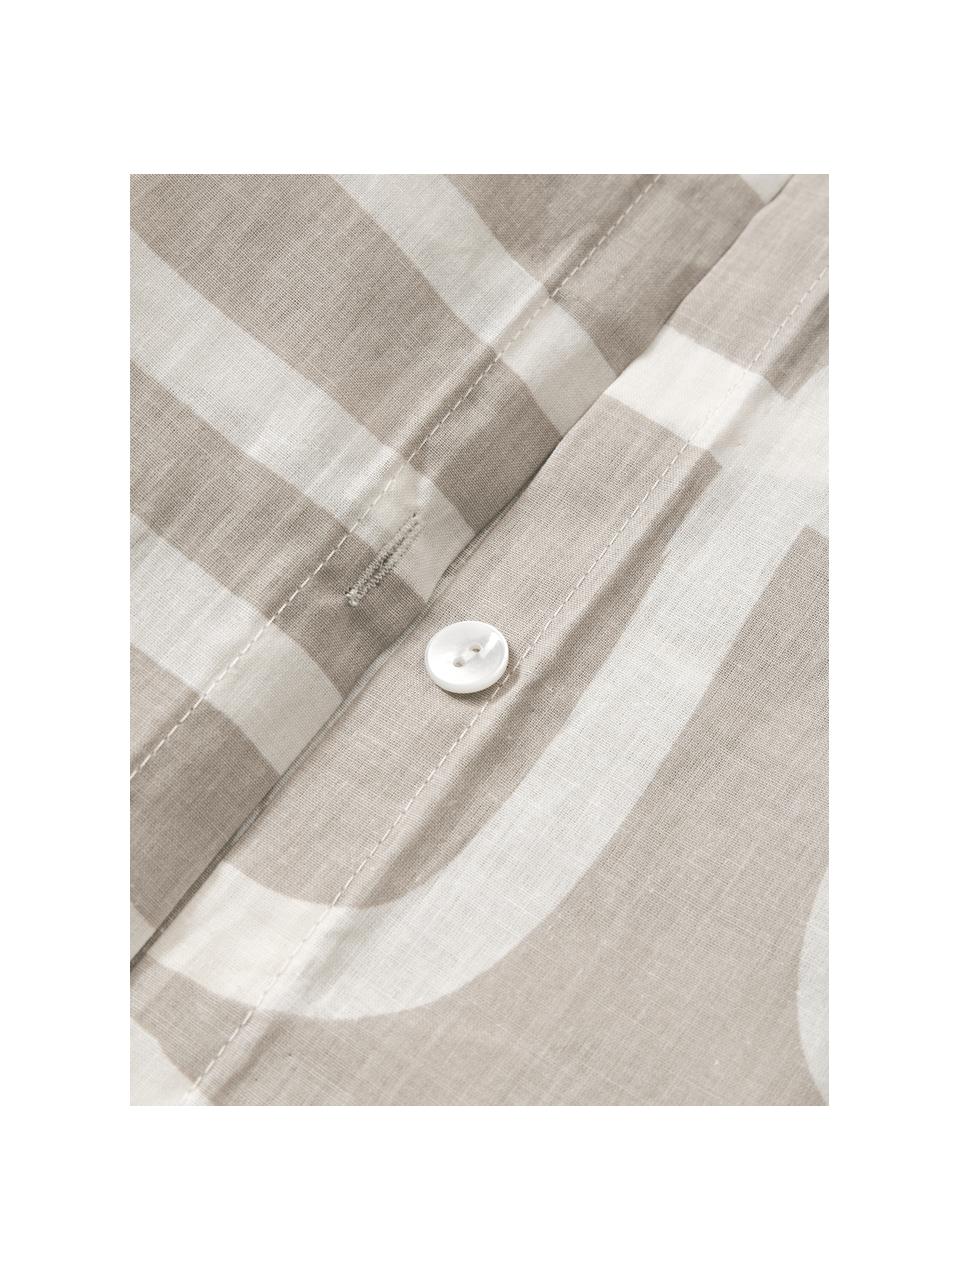 Baumwoll-Kopfkissenbezug Malu, Webart: Renforcé Fadendichte 144 , Hellbeige, Weiß, B 40 x L 80 cm